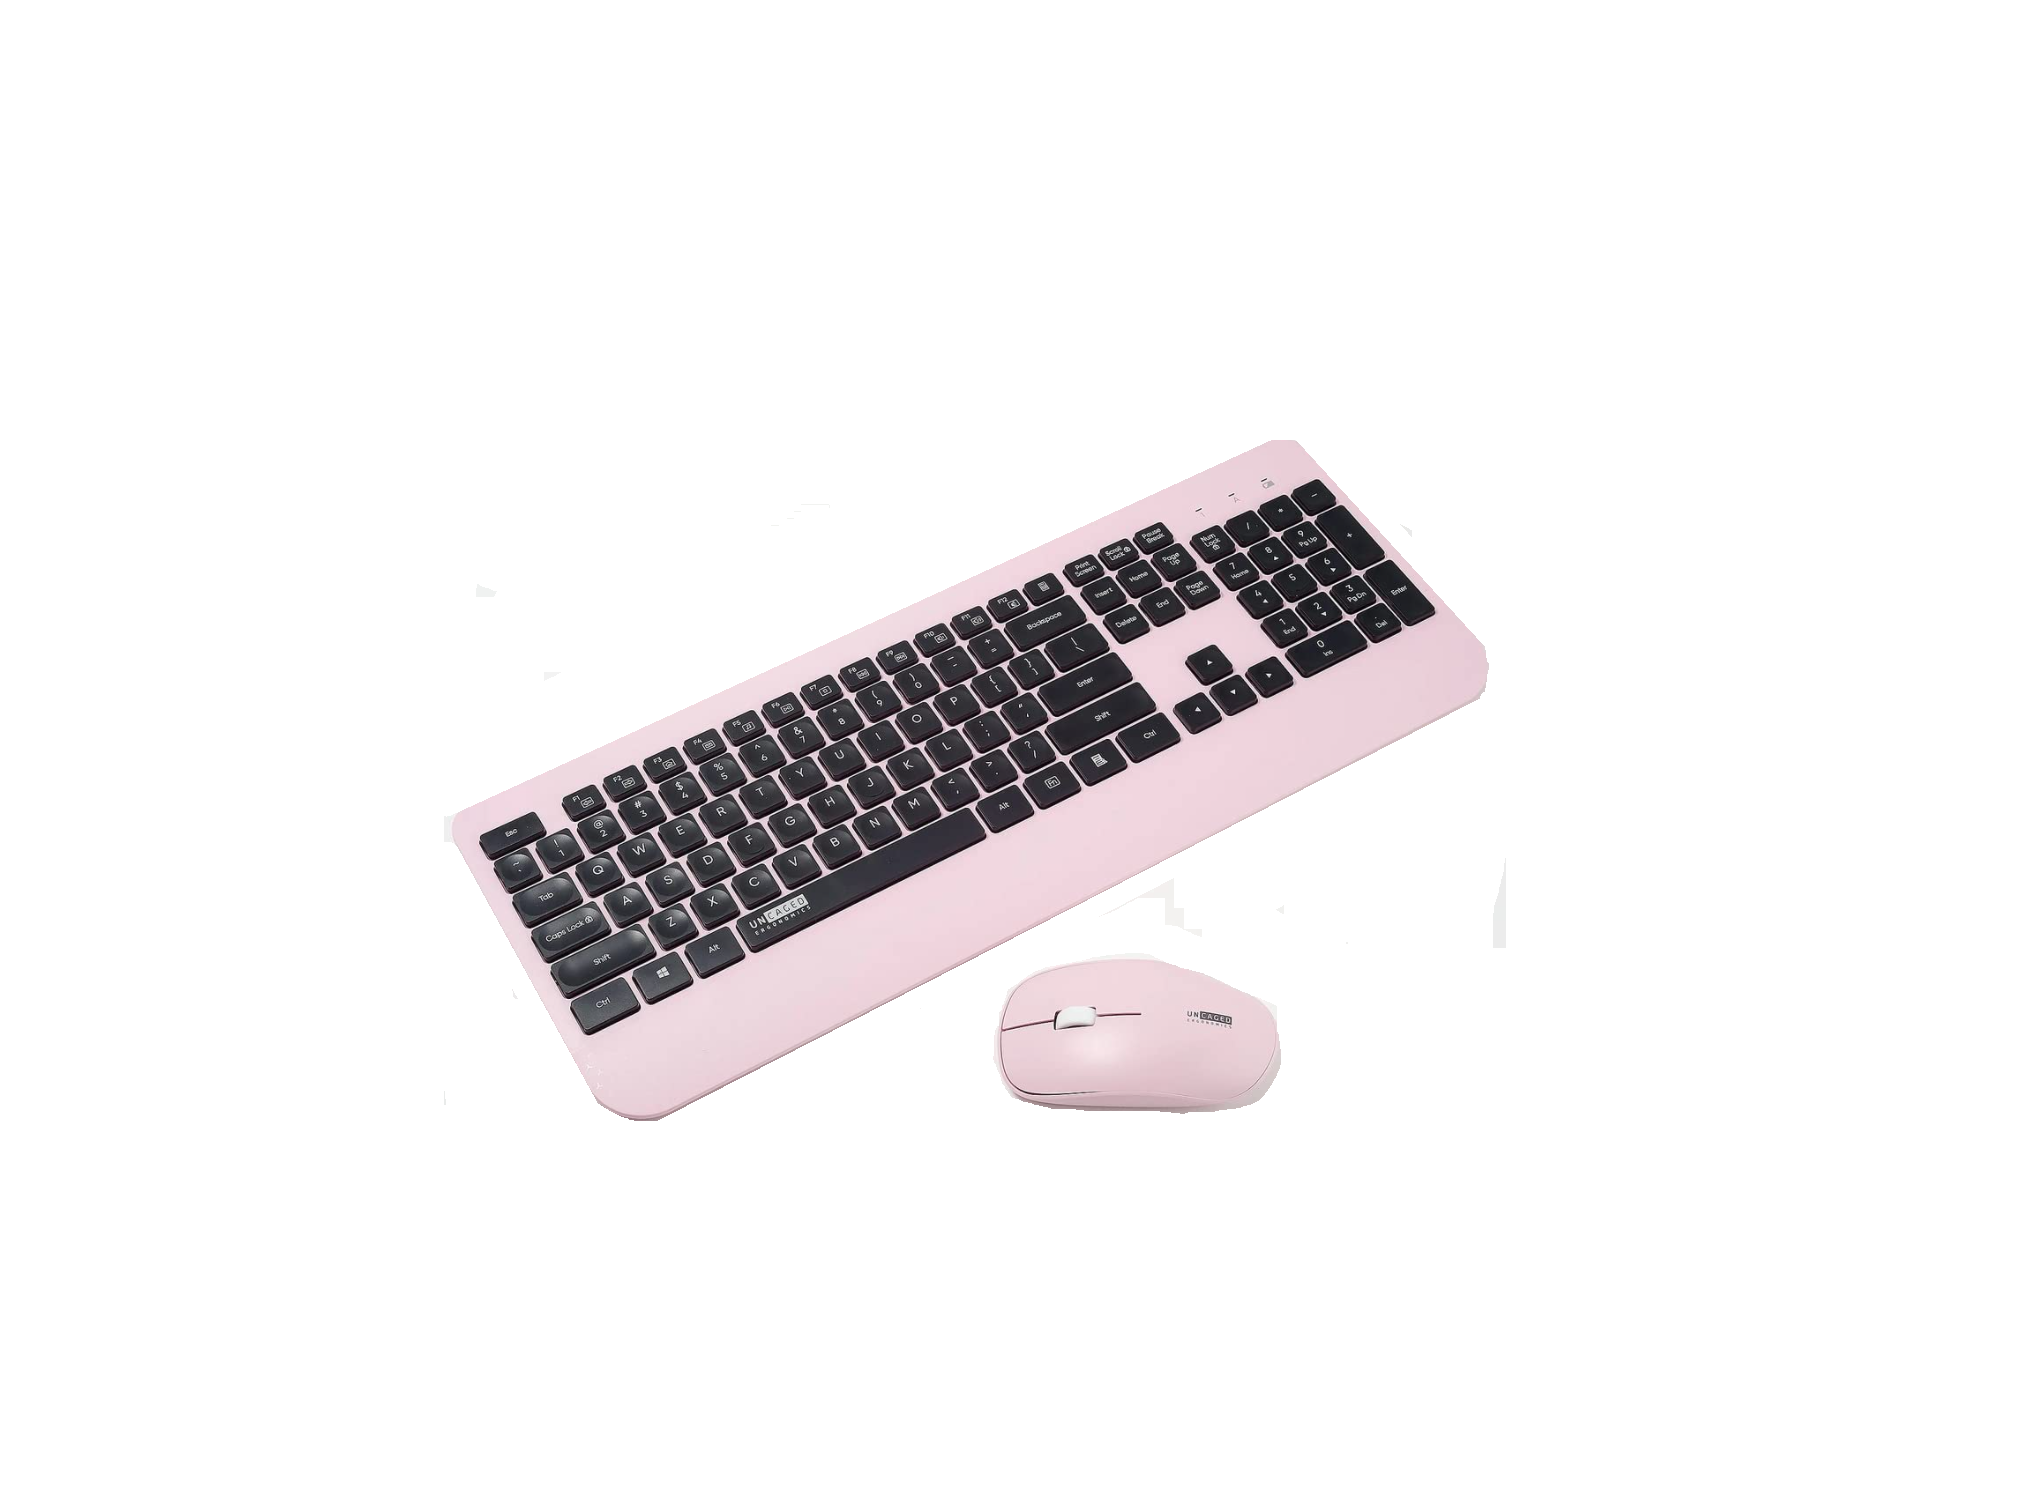 KM1 2.4G Wireless Mouse and Keyboard Combo